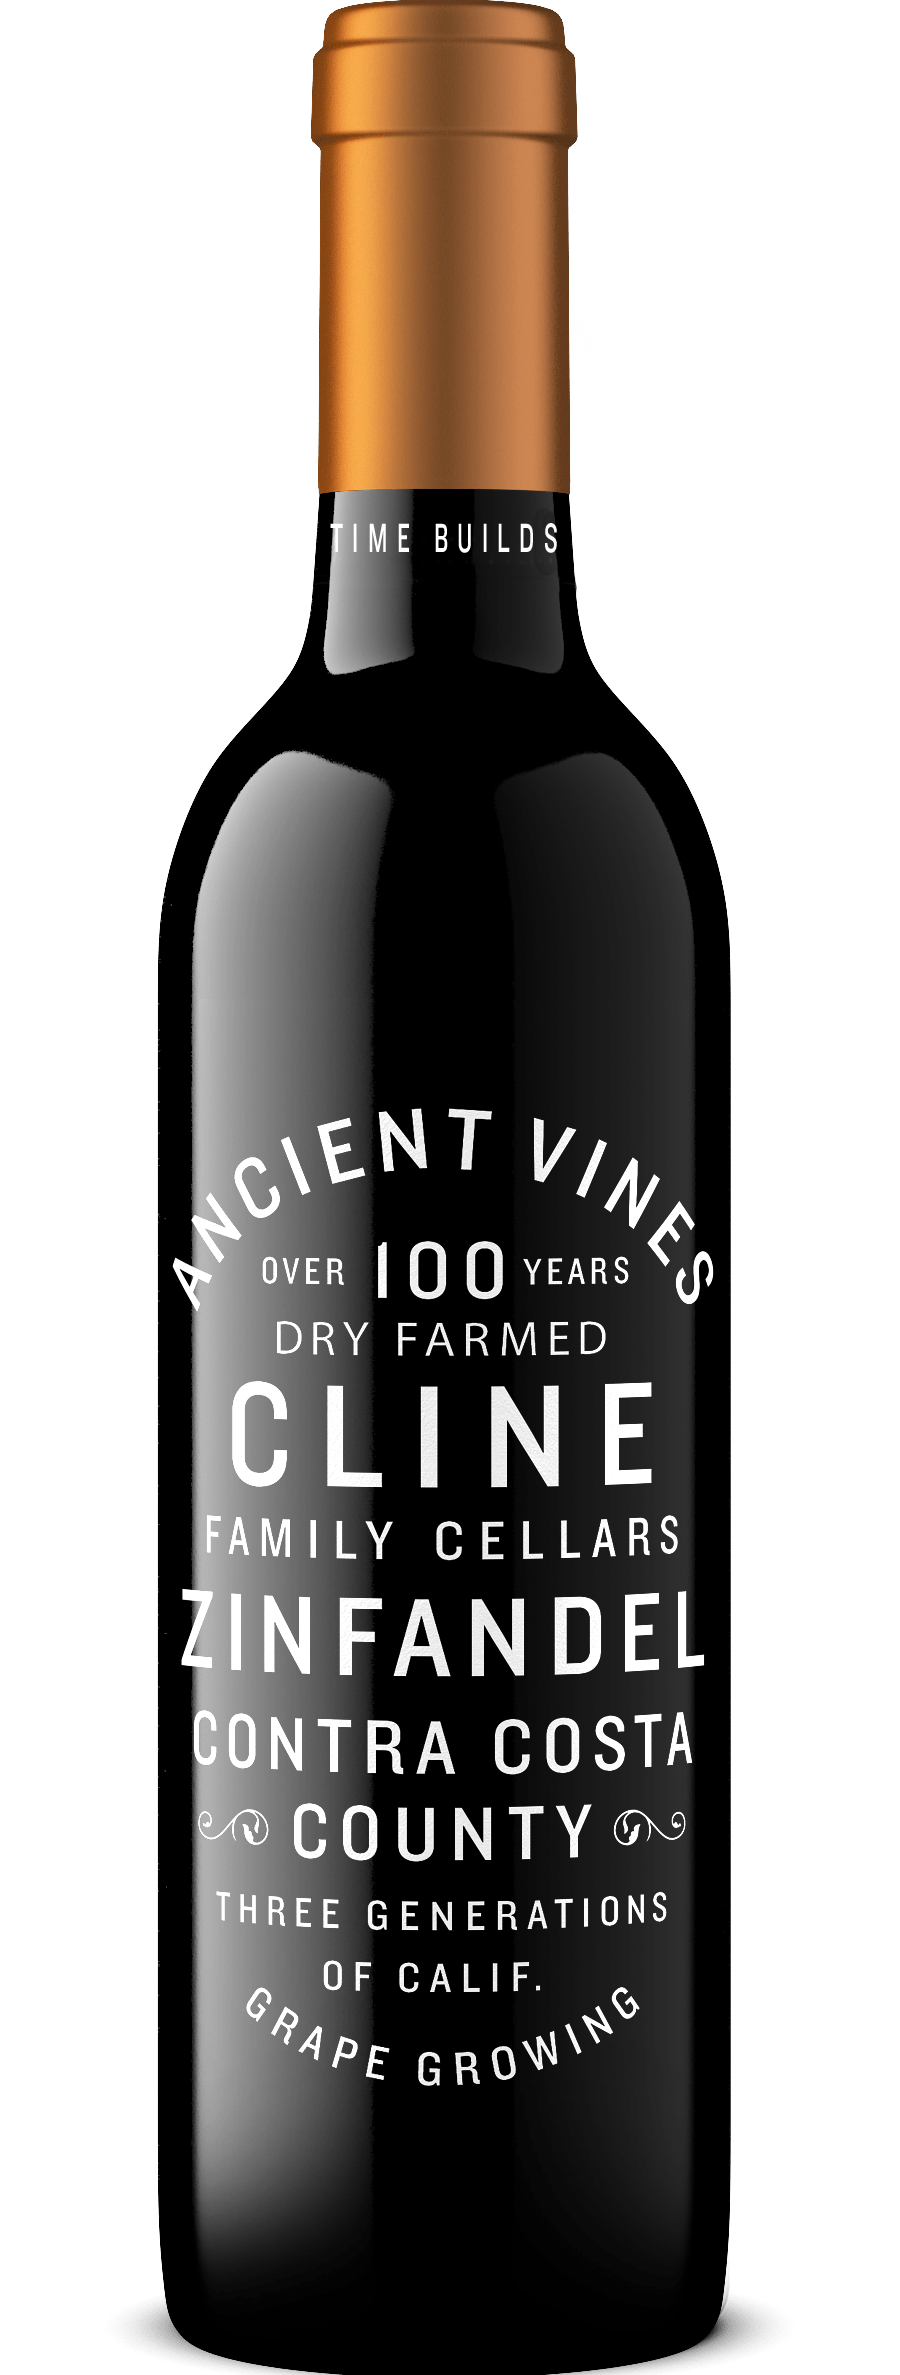 Wine Cline Ancient Vines Zinfandel Contra Costa County